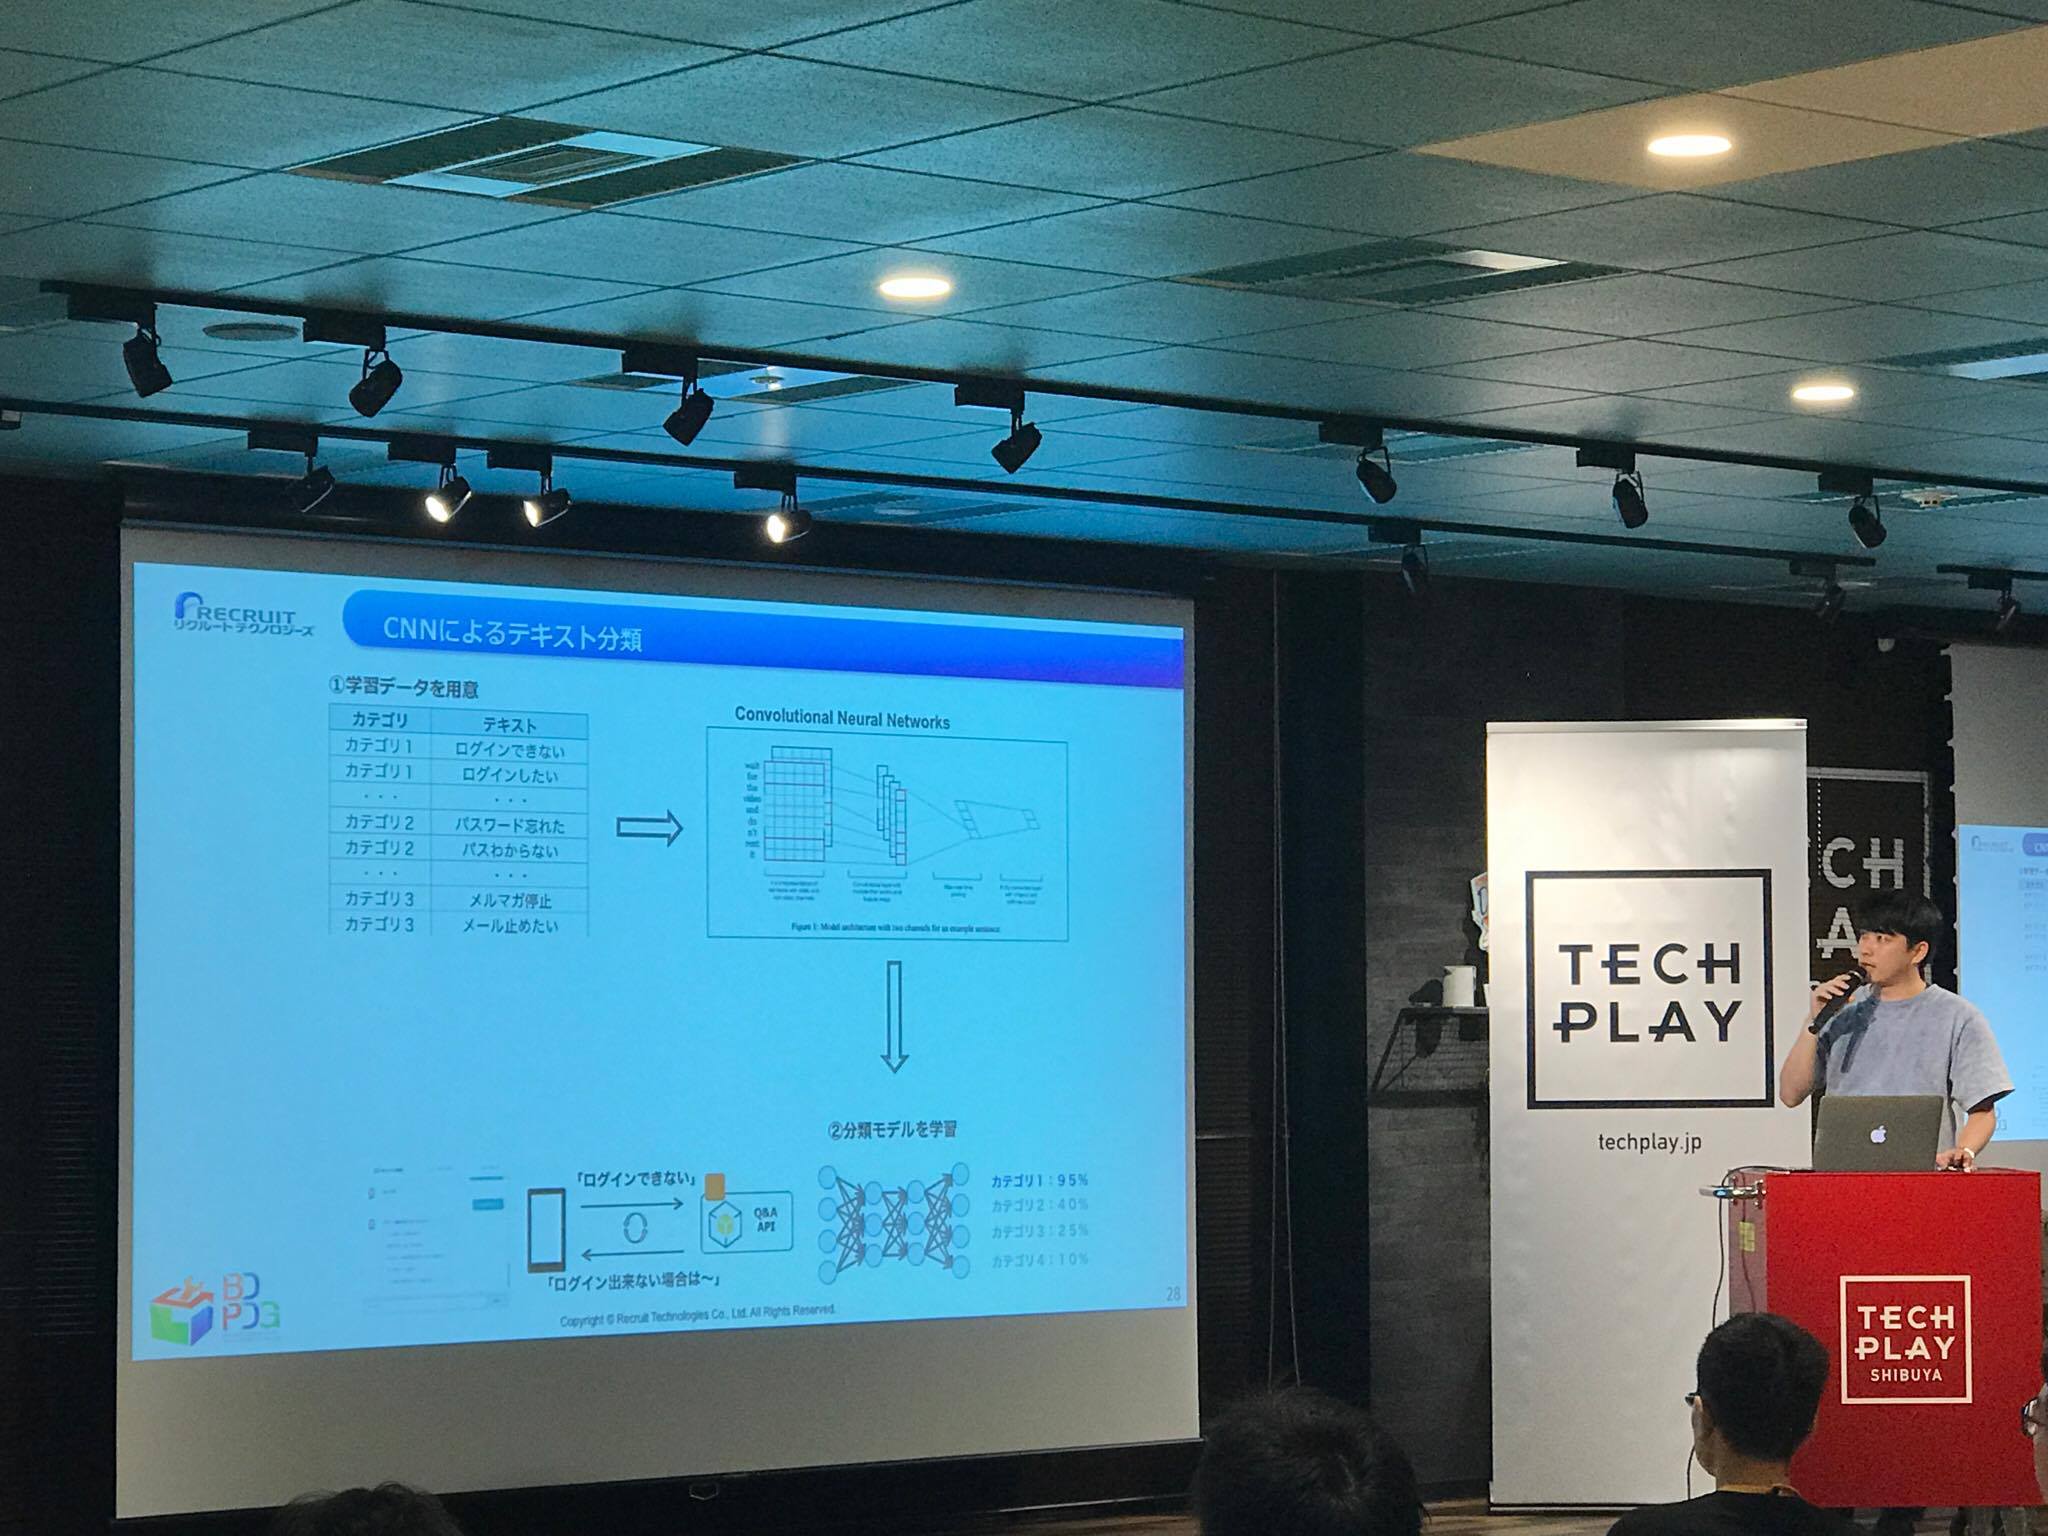 TECH PLAY CONFERENCE 2017で機械学習APIとChatbotの話をしました